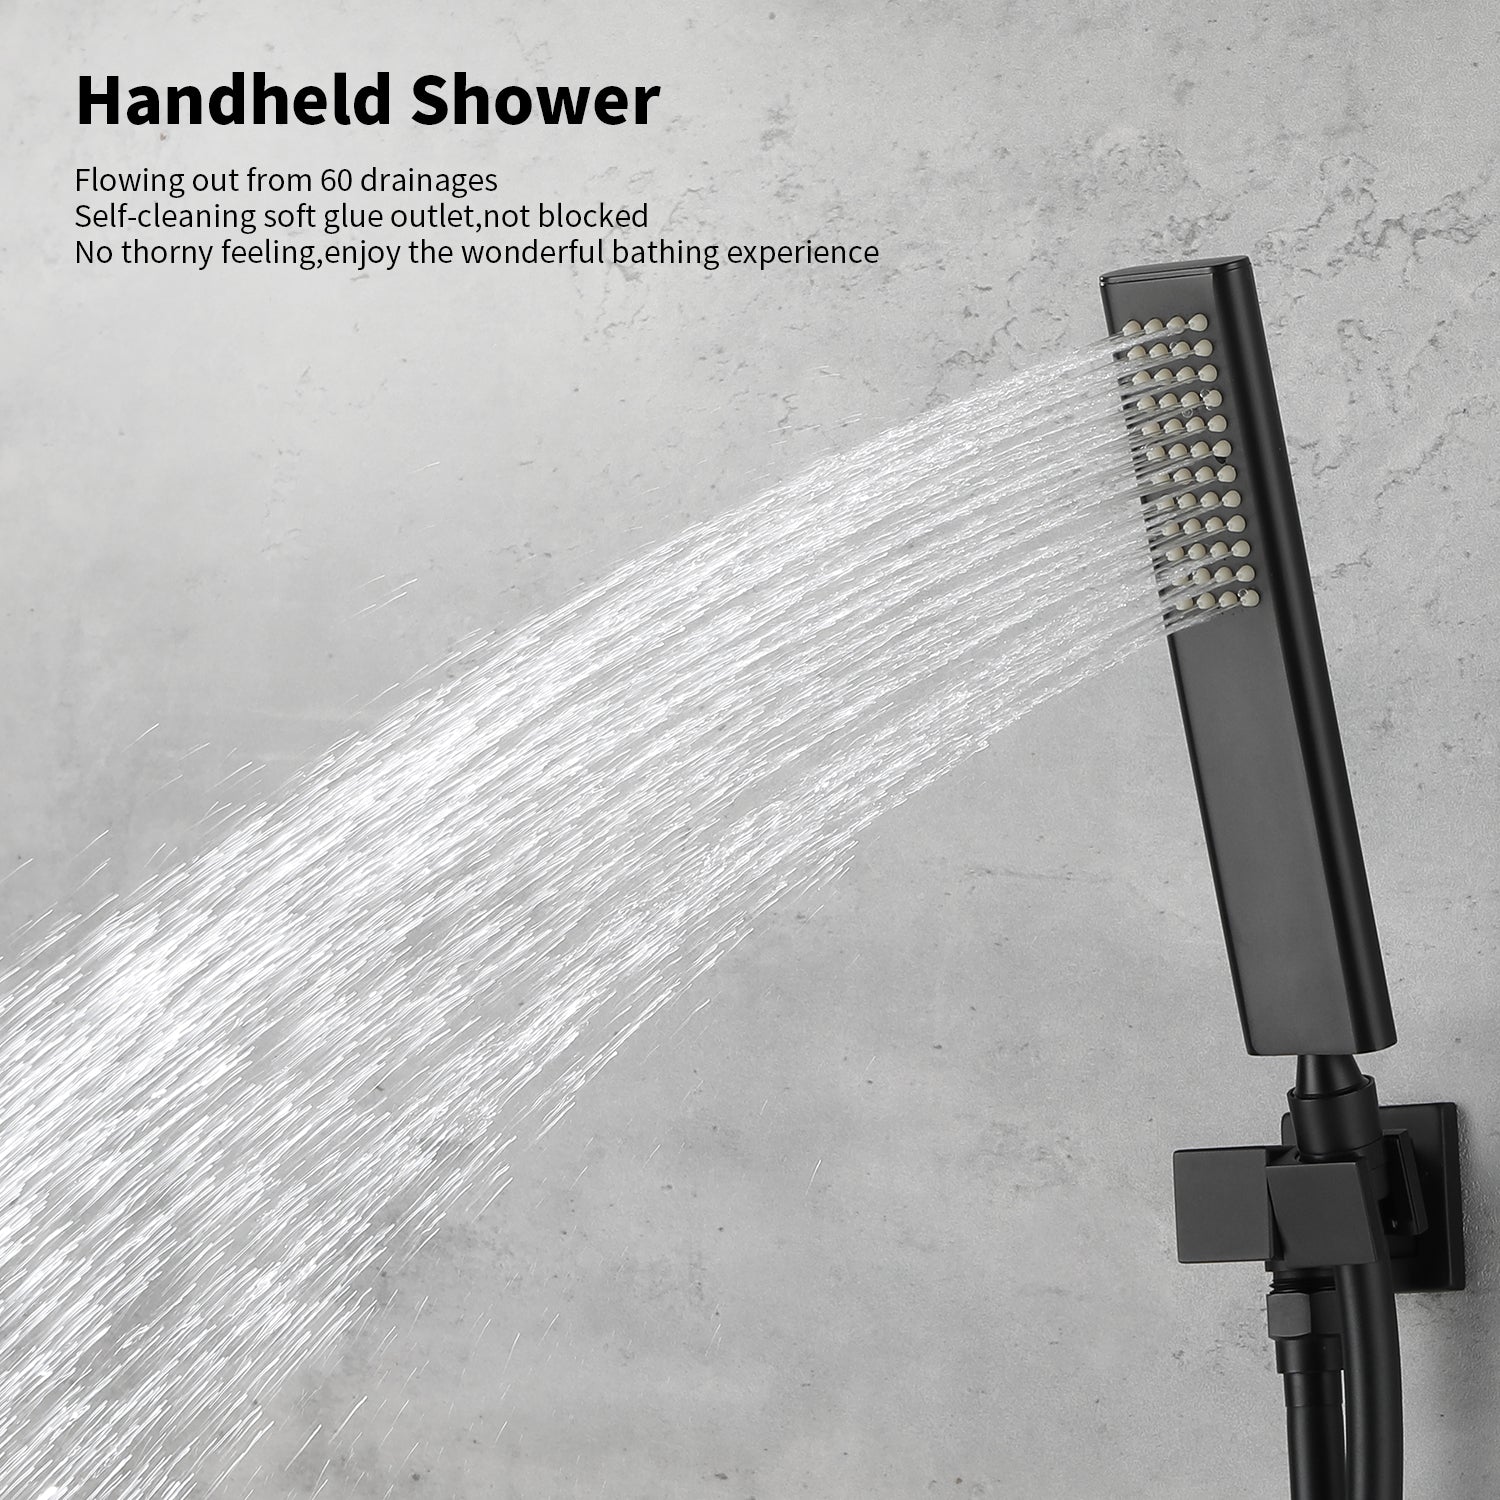 ZNTS Male NPT Bathtub Shower Faucet Set, Waterfall Tub Faucet with 12-Inch Matte Black Rain Shower Head 06639859